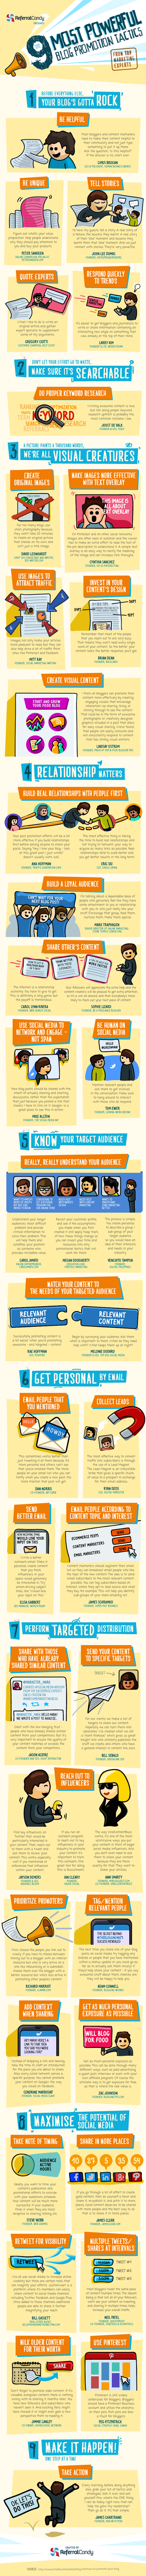 blog promotion tactics infographic